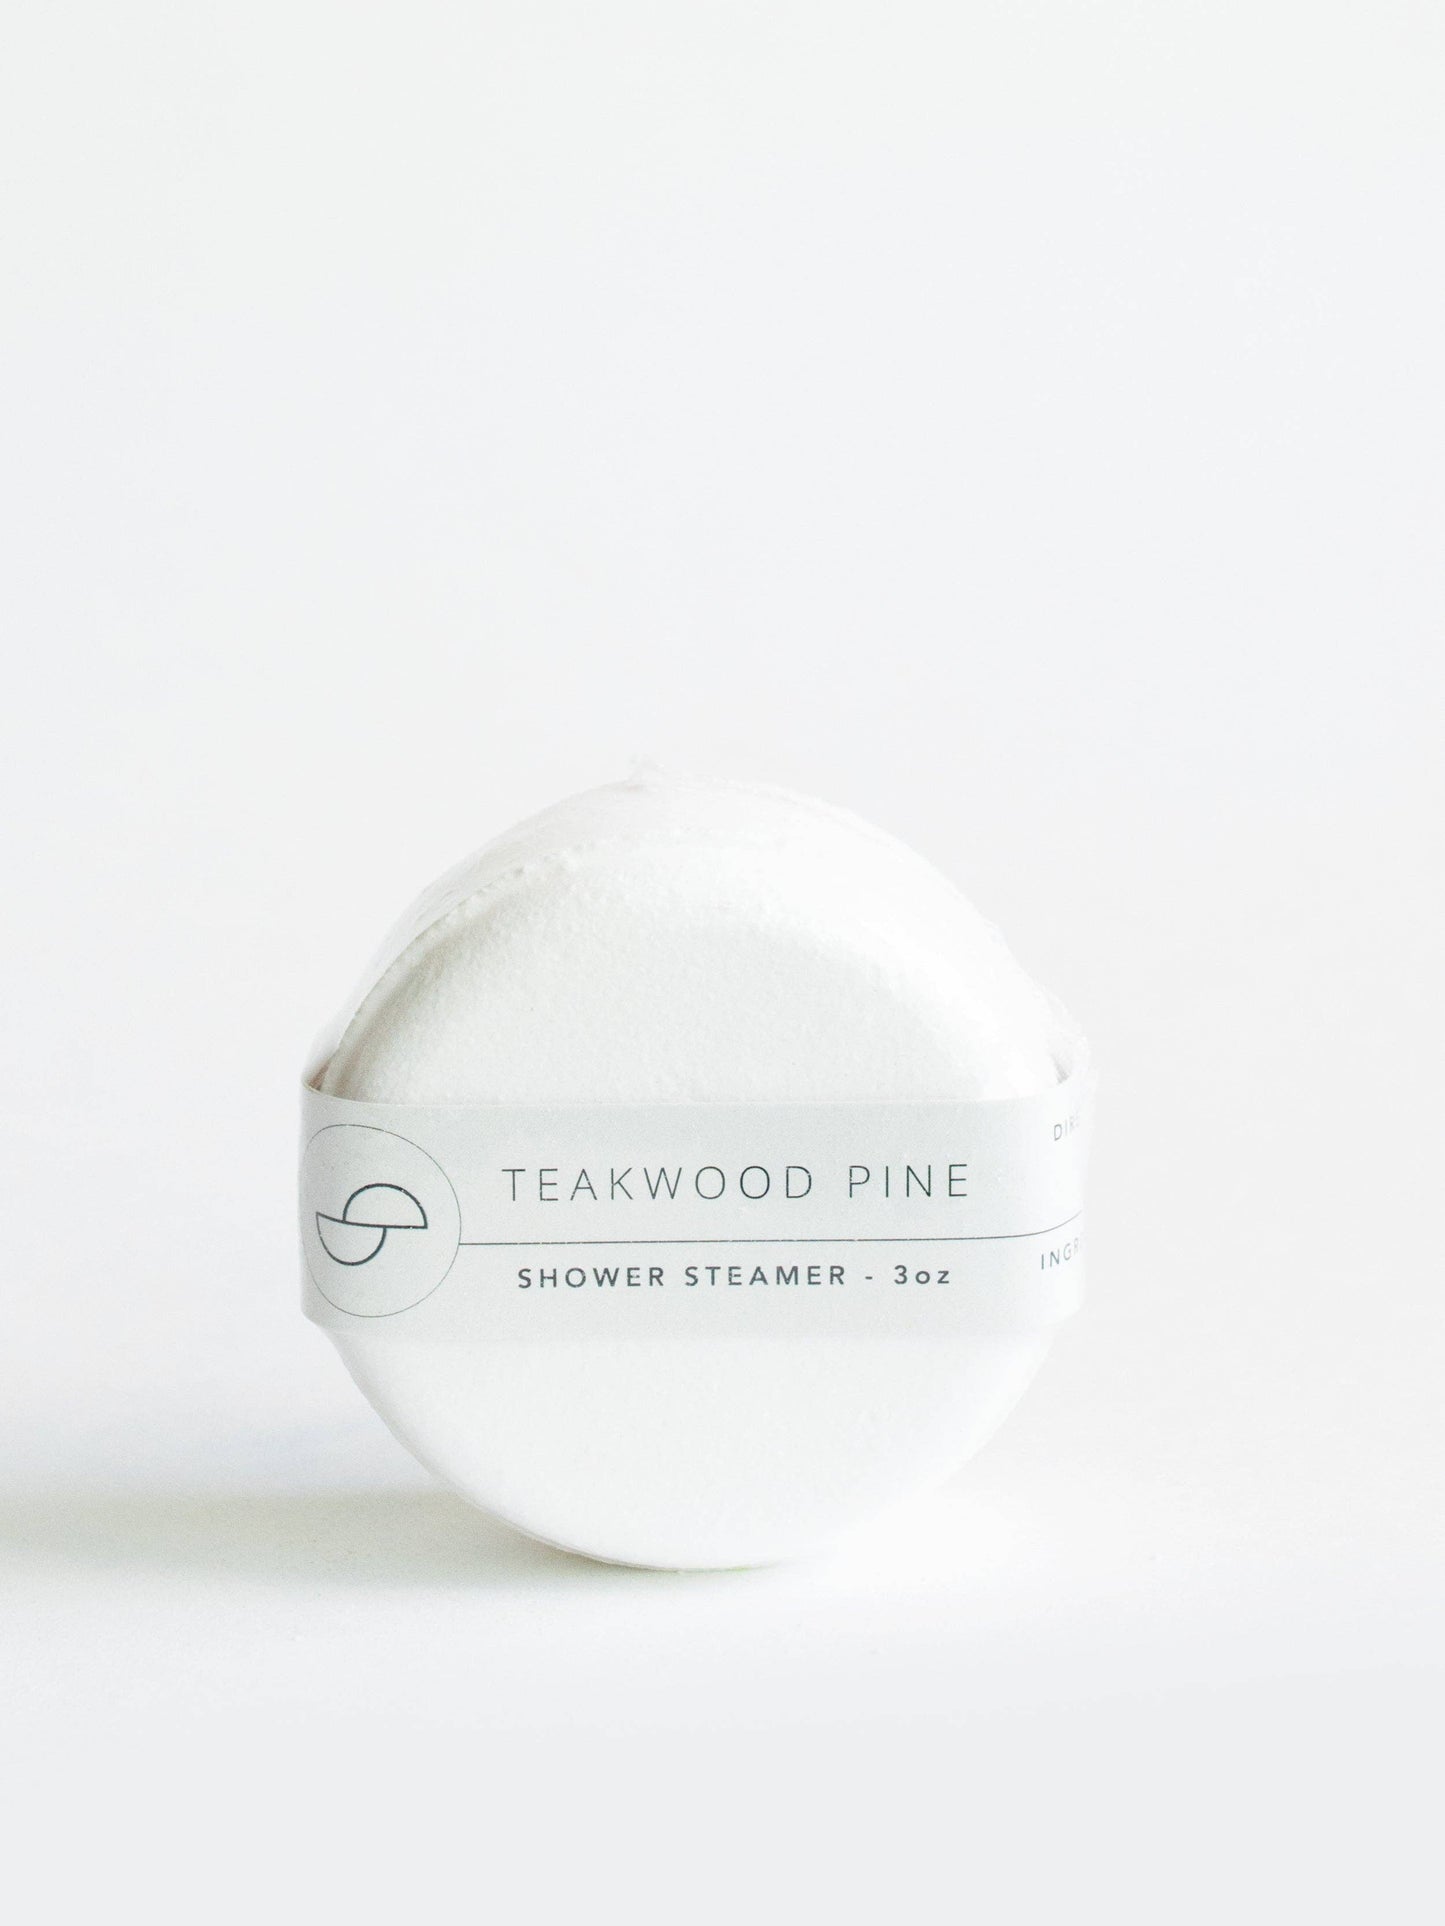 Lend Me Some Sugar Bath Company - Teakwook Pine Shower Steamer